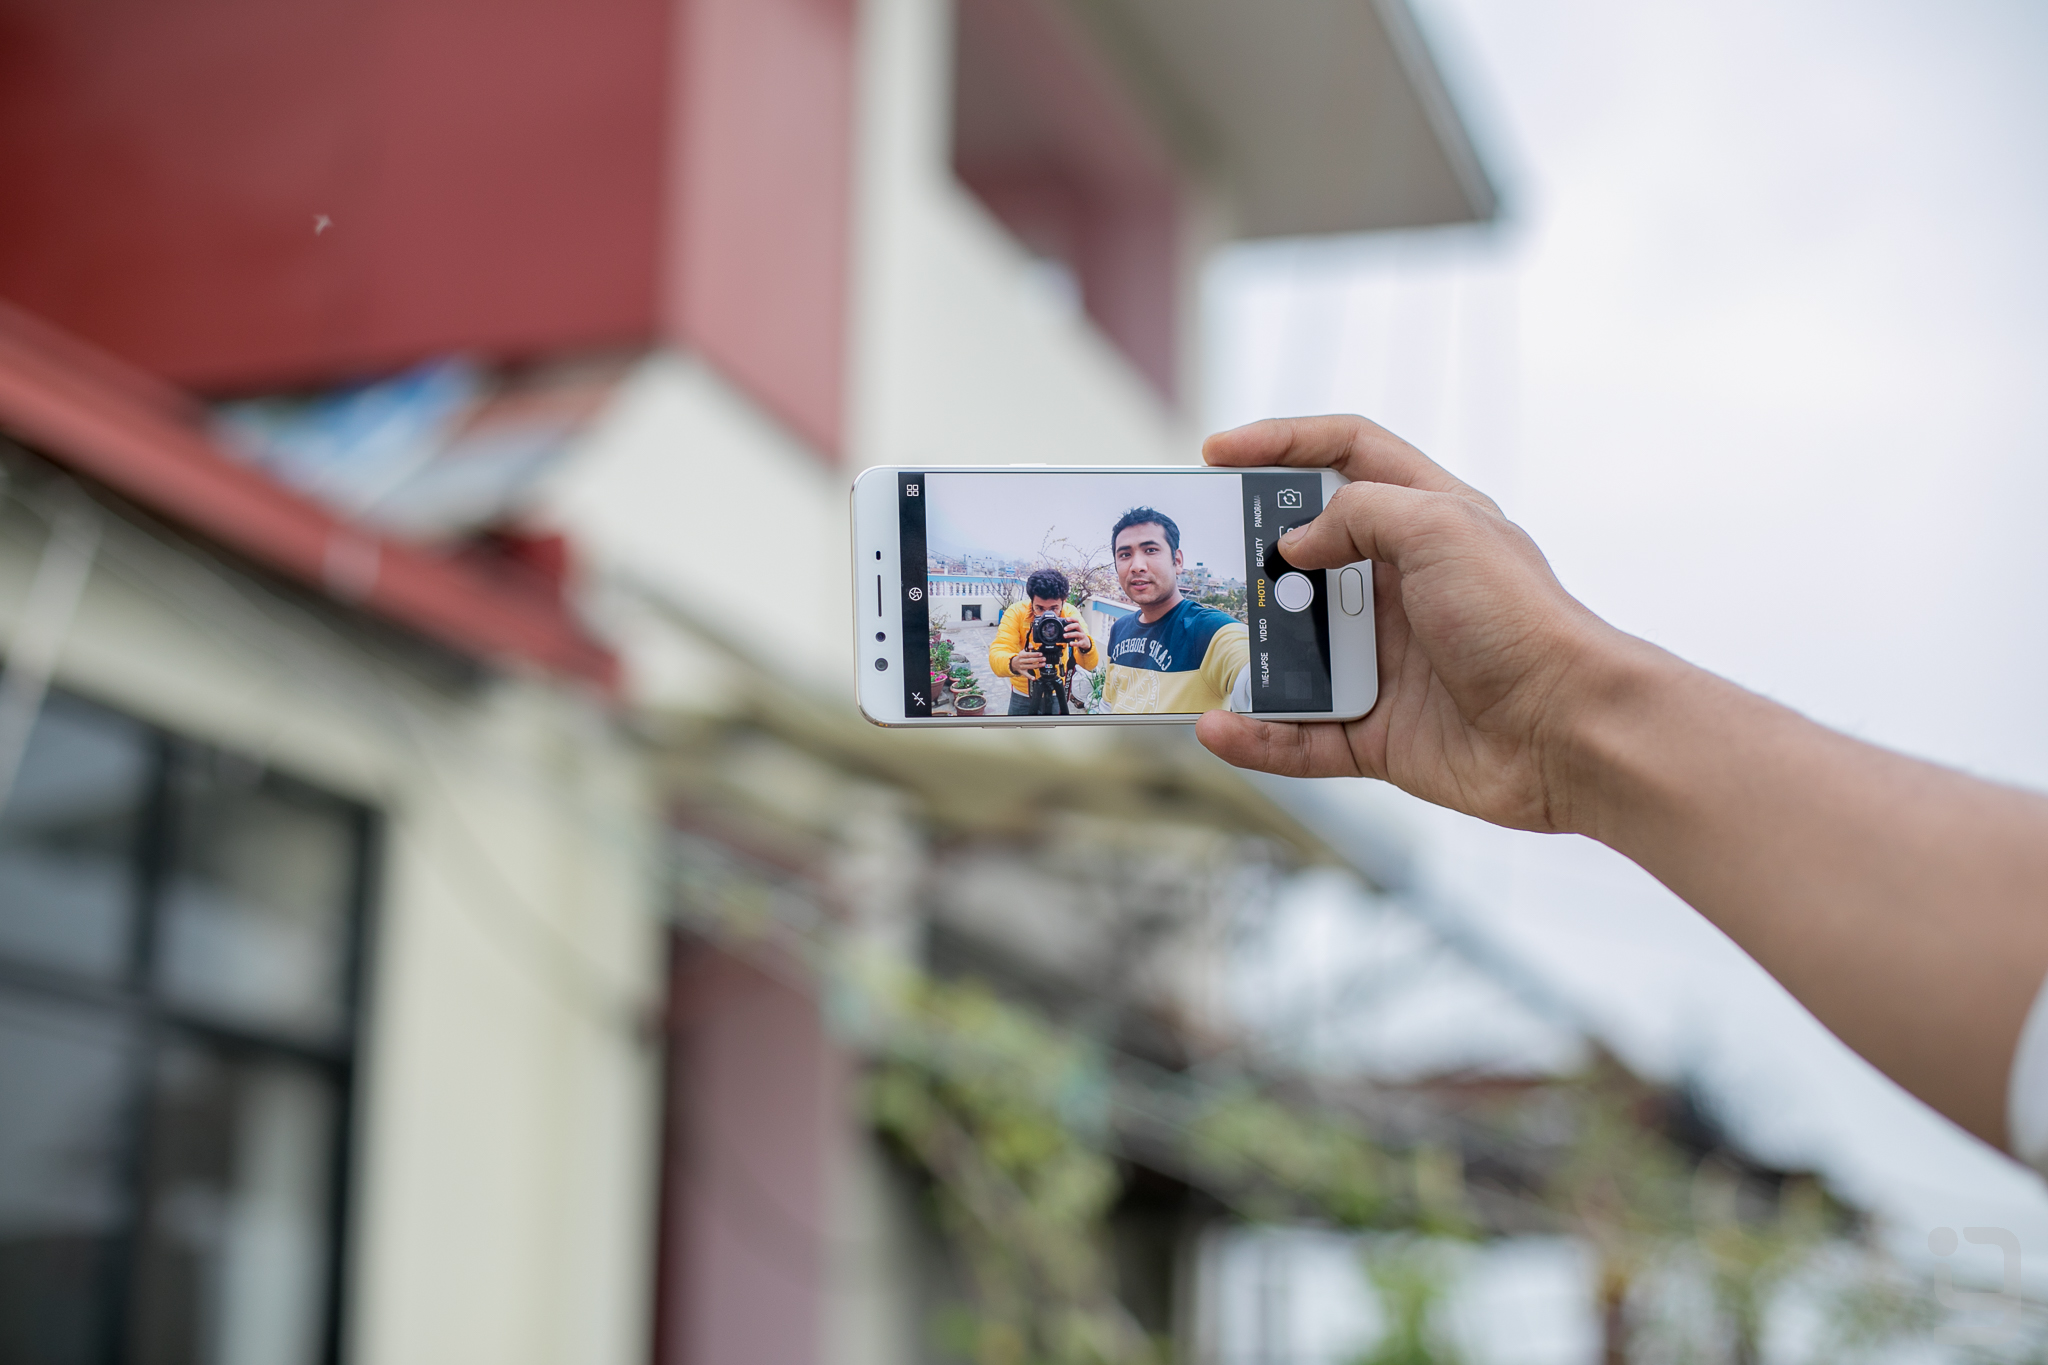 Oppo F3 Plus camera phone in nepal 